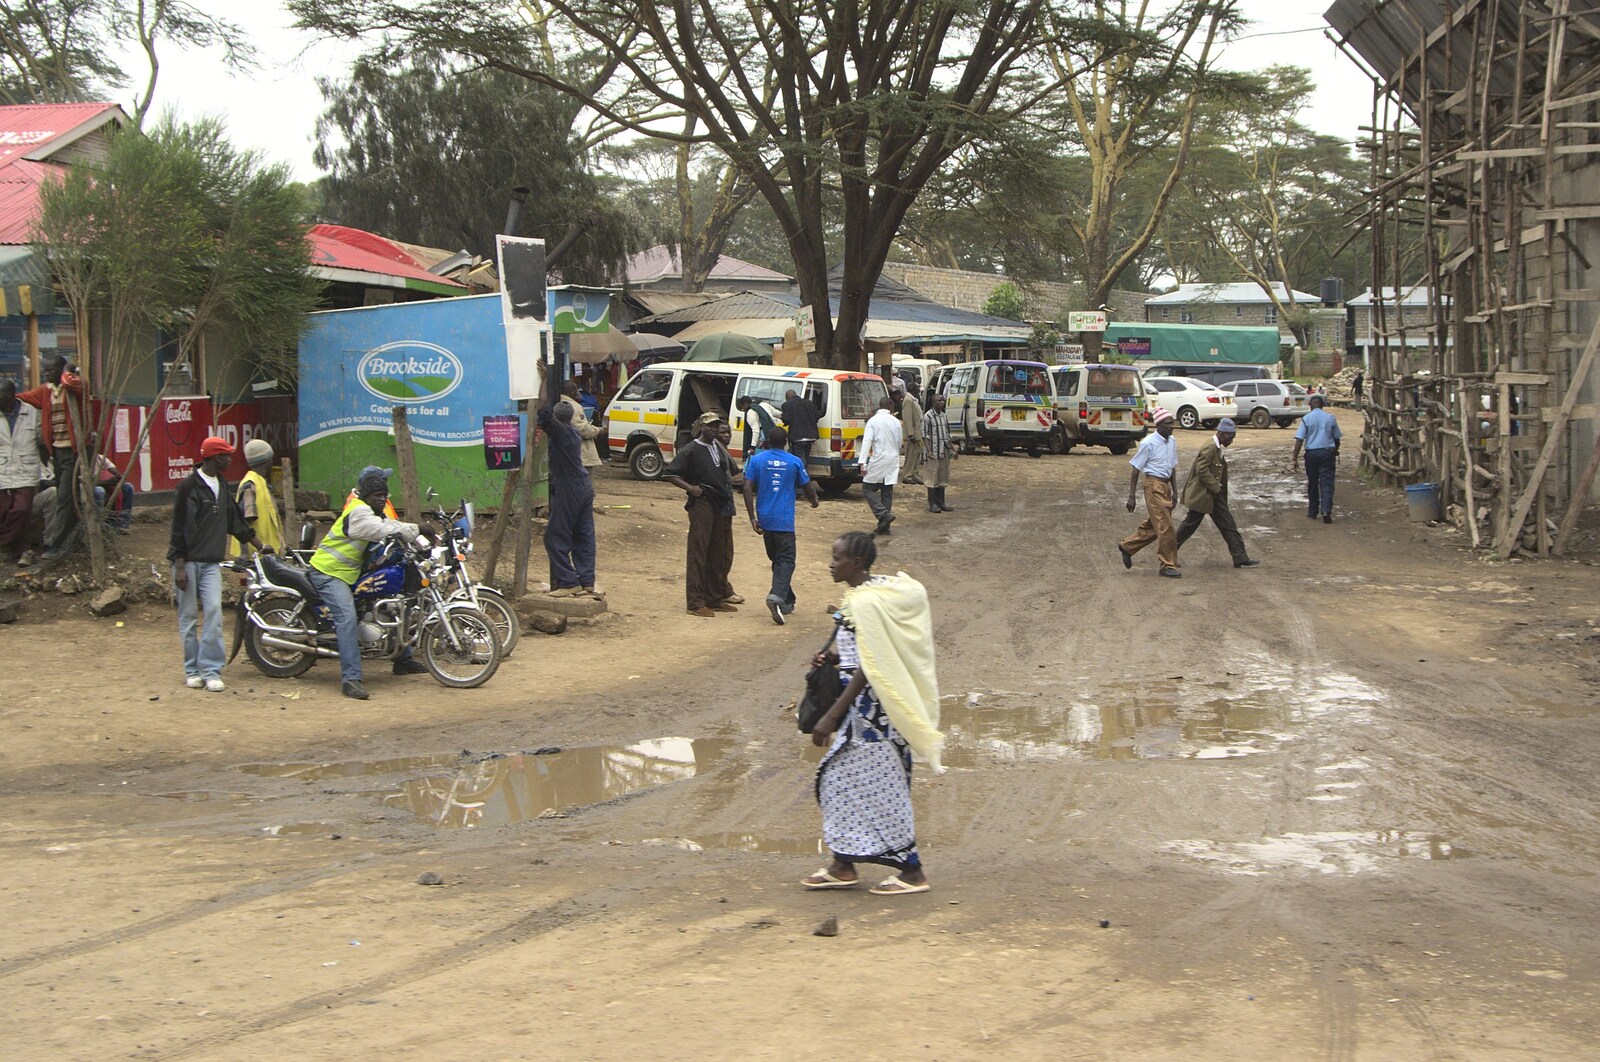 Narok to Naivasha and Hell's Gate National Park, Kenya, Africa - 5th November 2010: A street scene in Narok